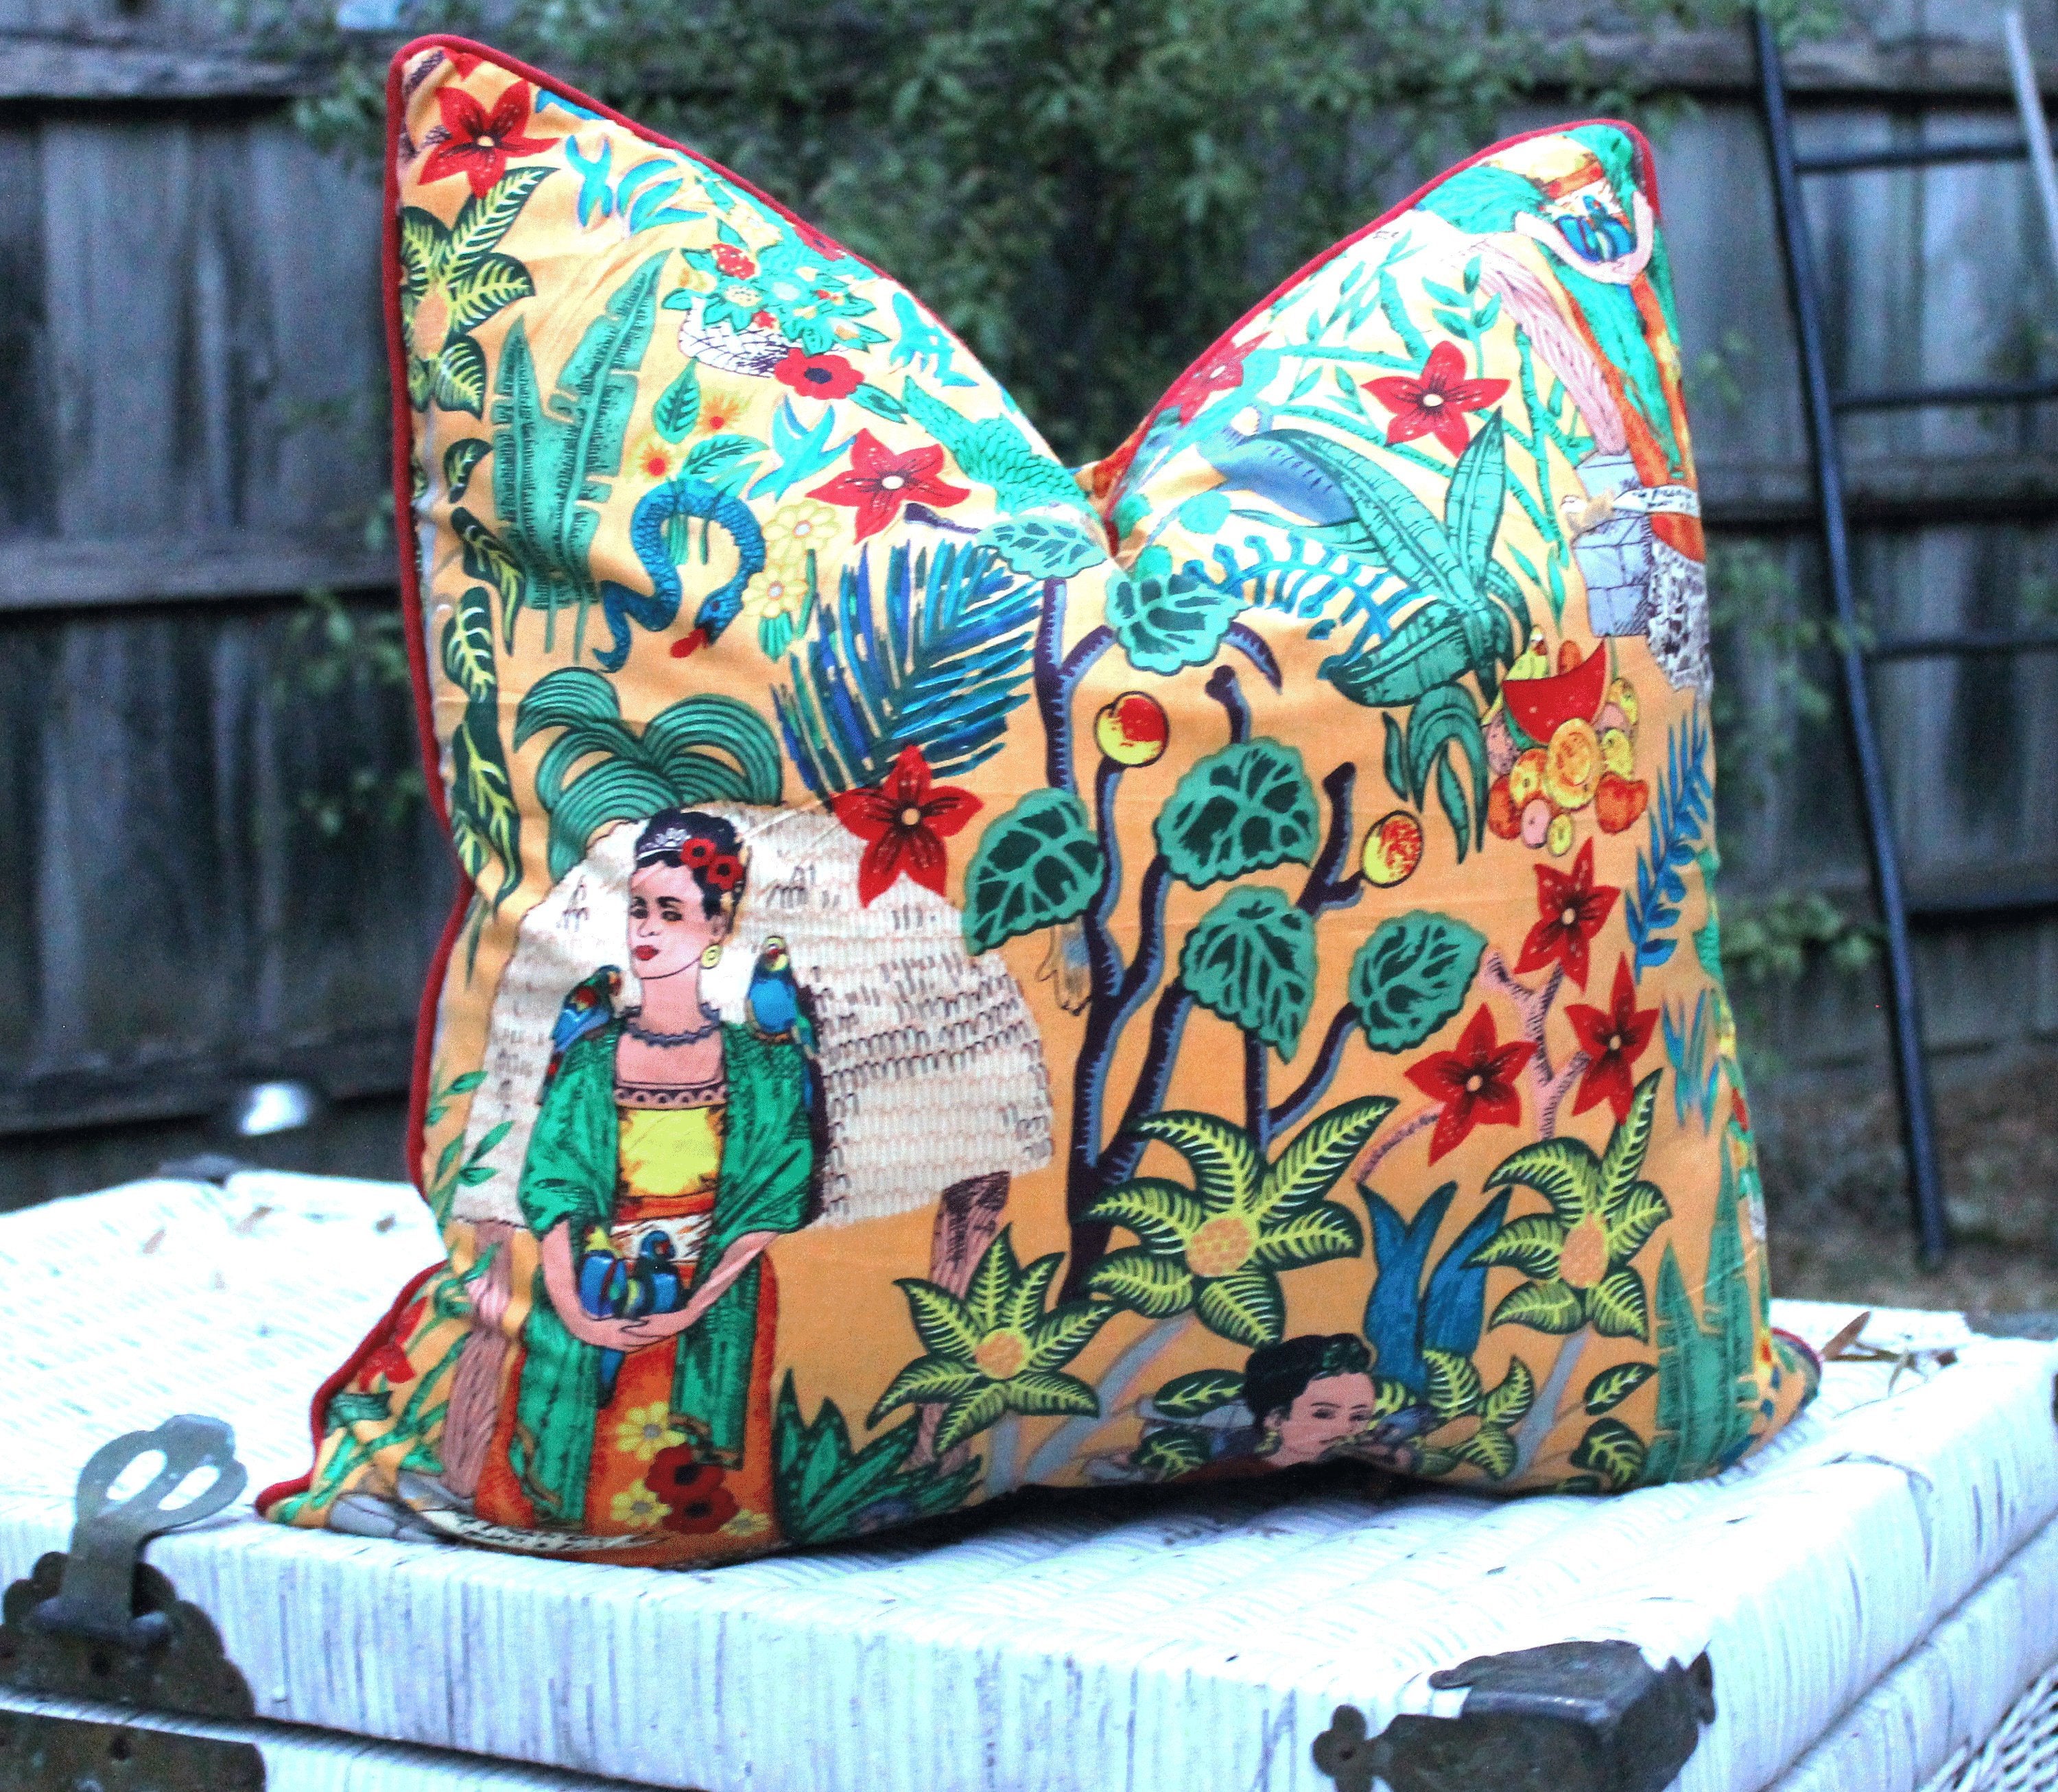 Mexican Painter Pillow Case, Frida Floral Decorative Cushion, Jungle Plants Mexican Painter Art Garden Country Mexico Muertes Cushion